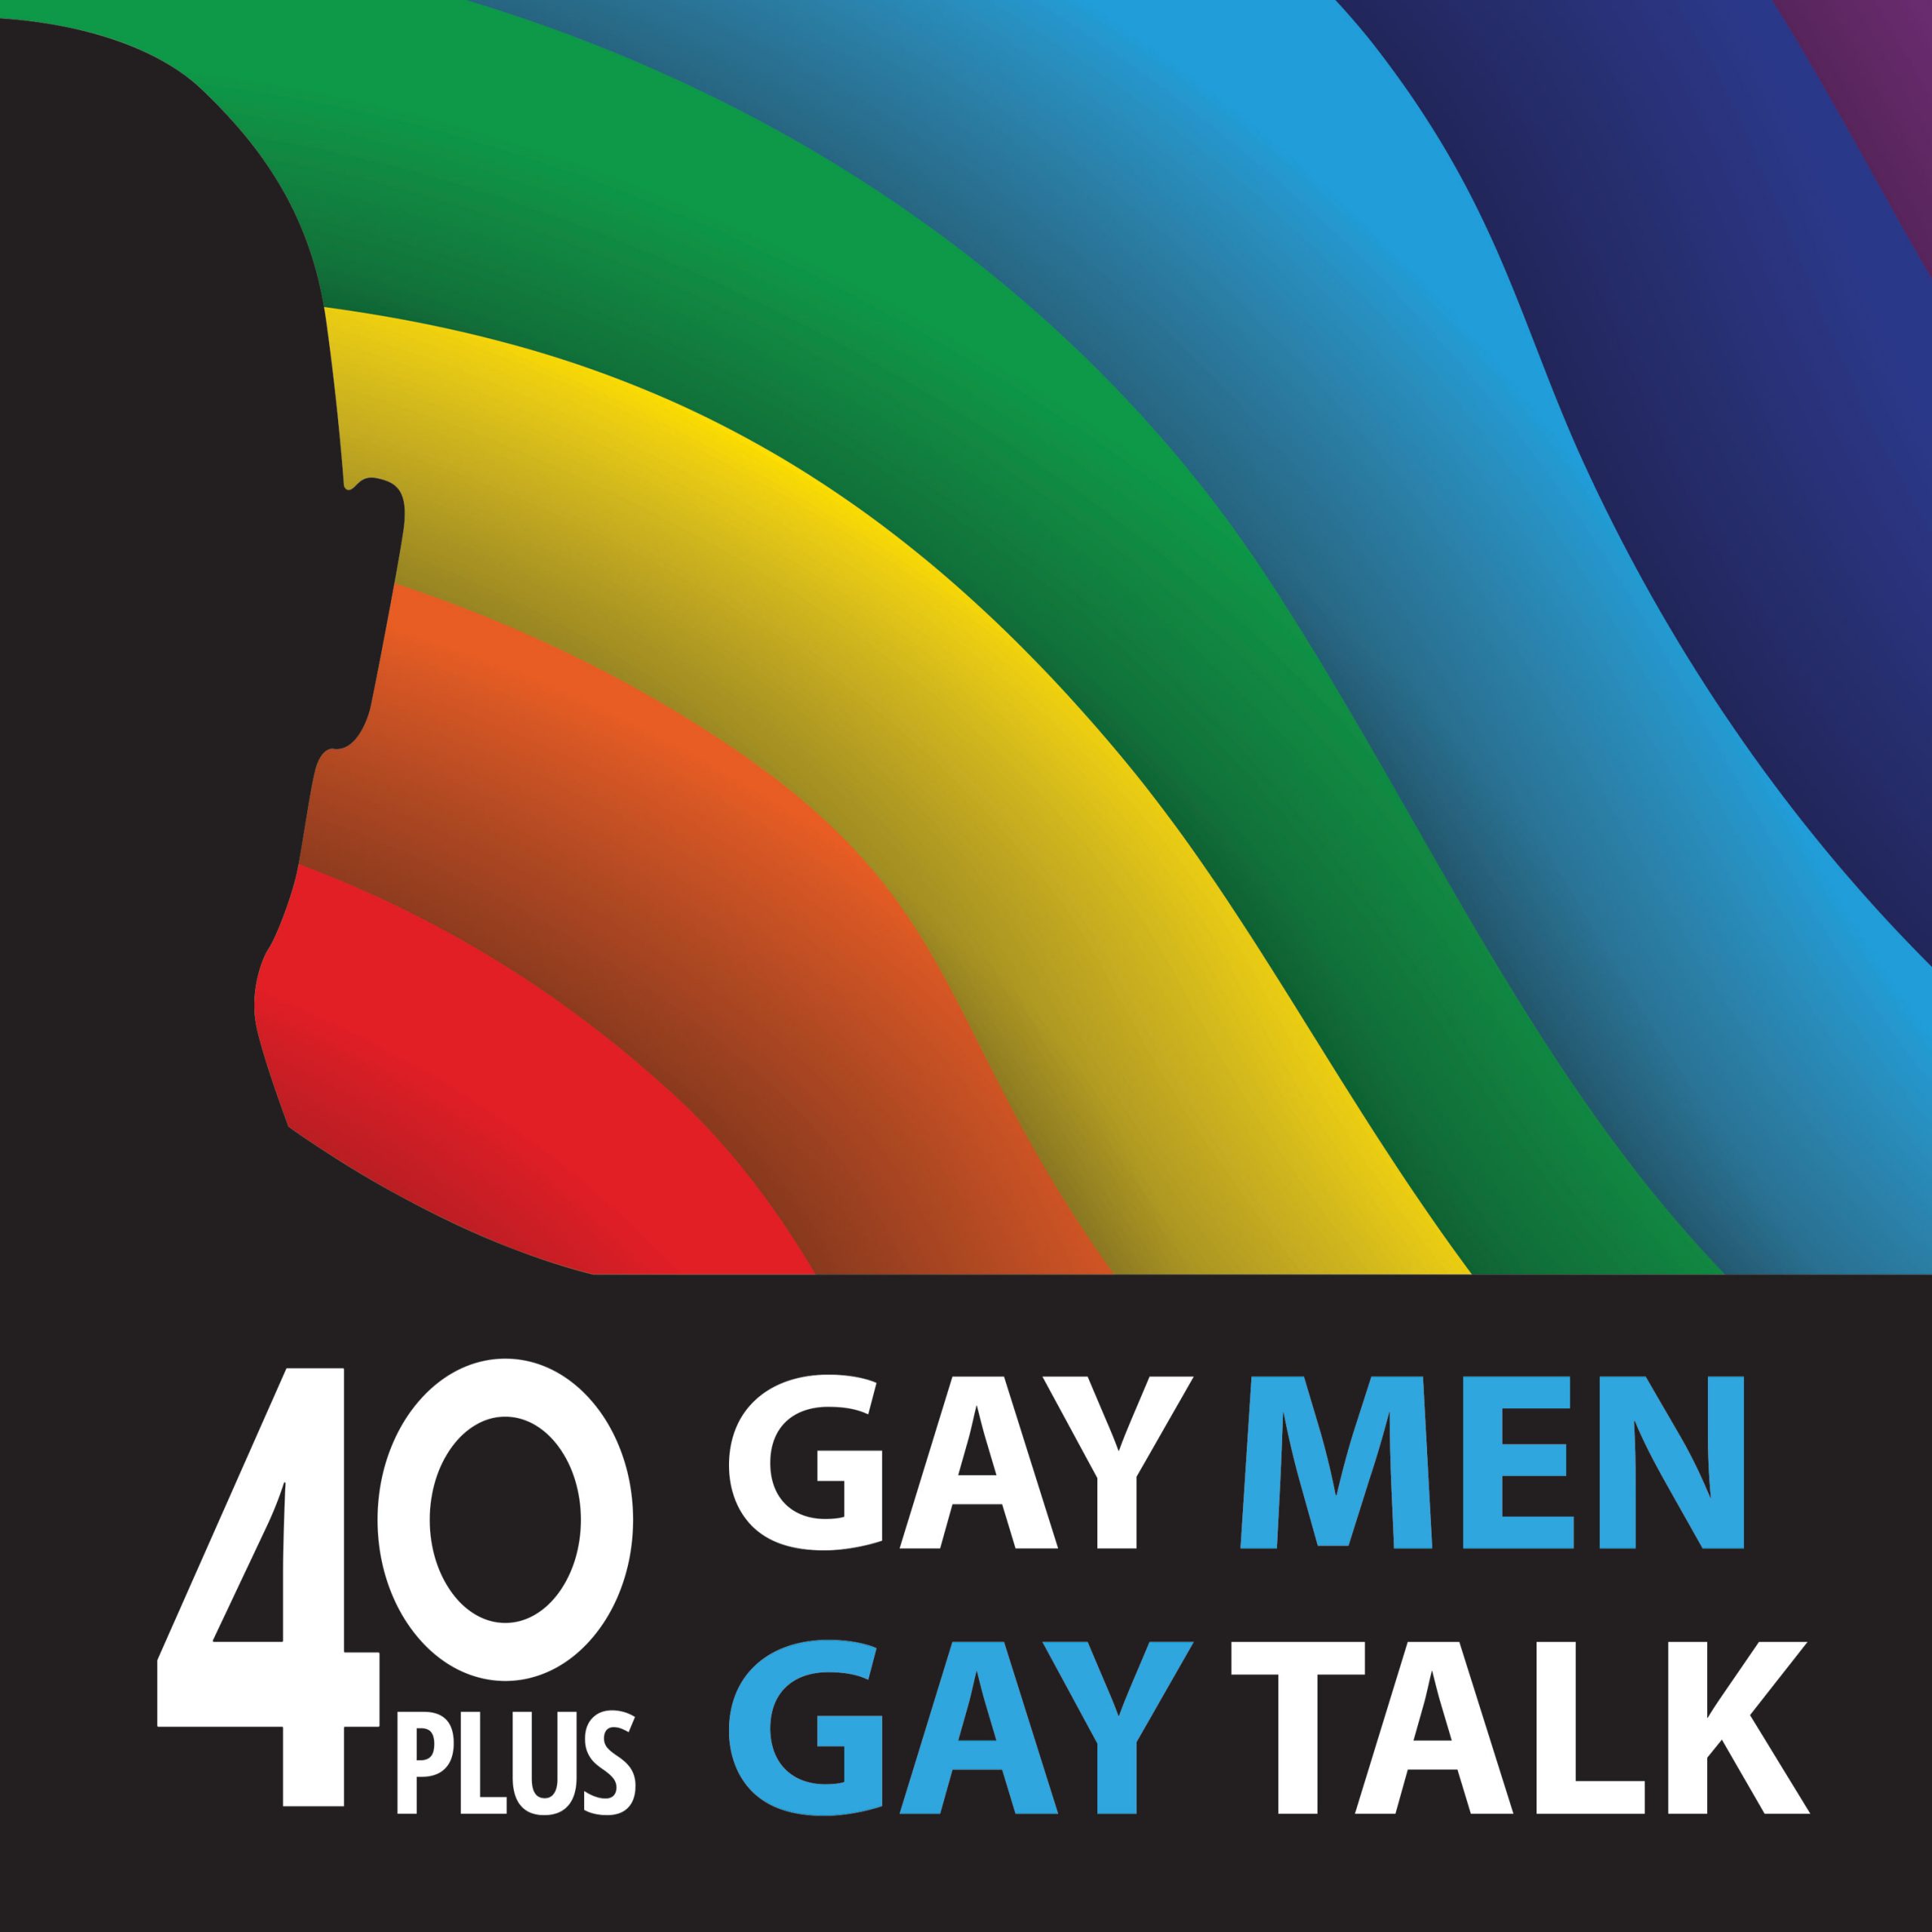 Artwork for podcast 40 Plus: Gay Men. Gay Talk.